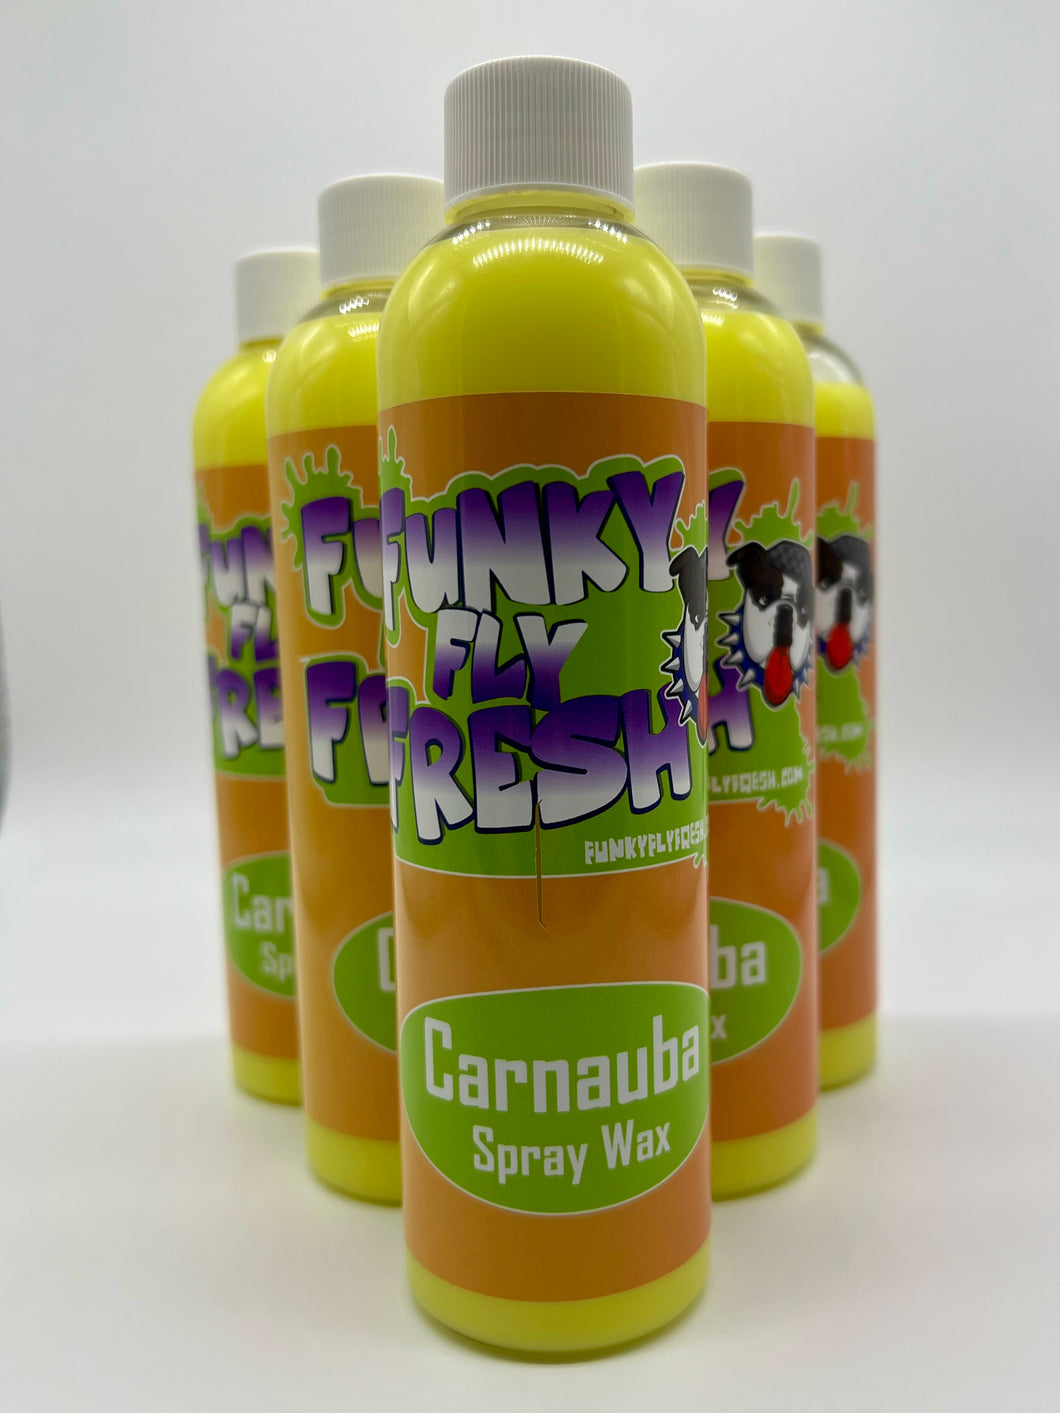 Carnauba Spray Wax